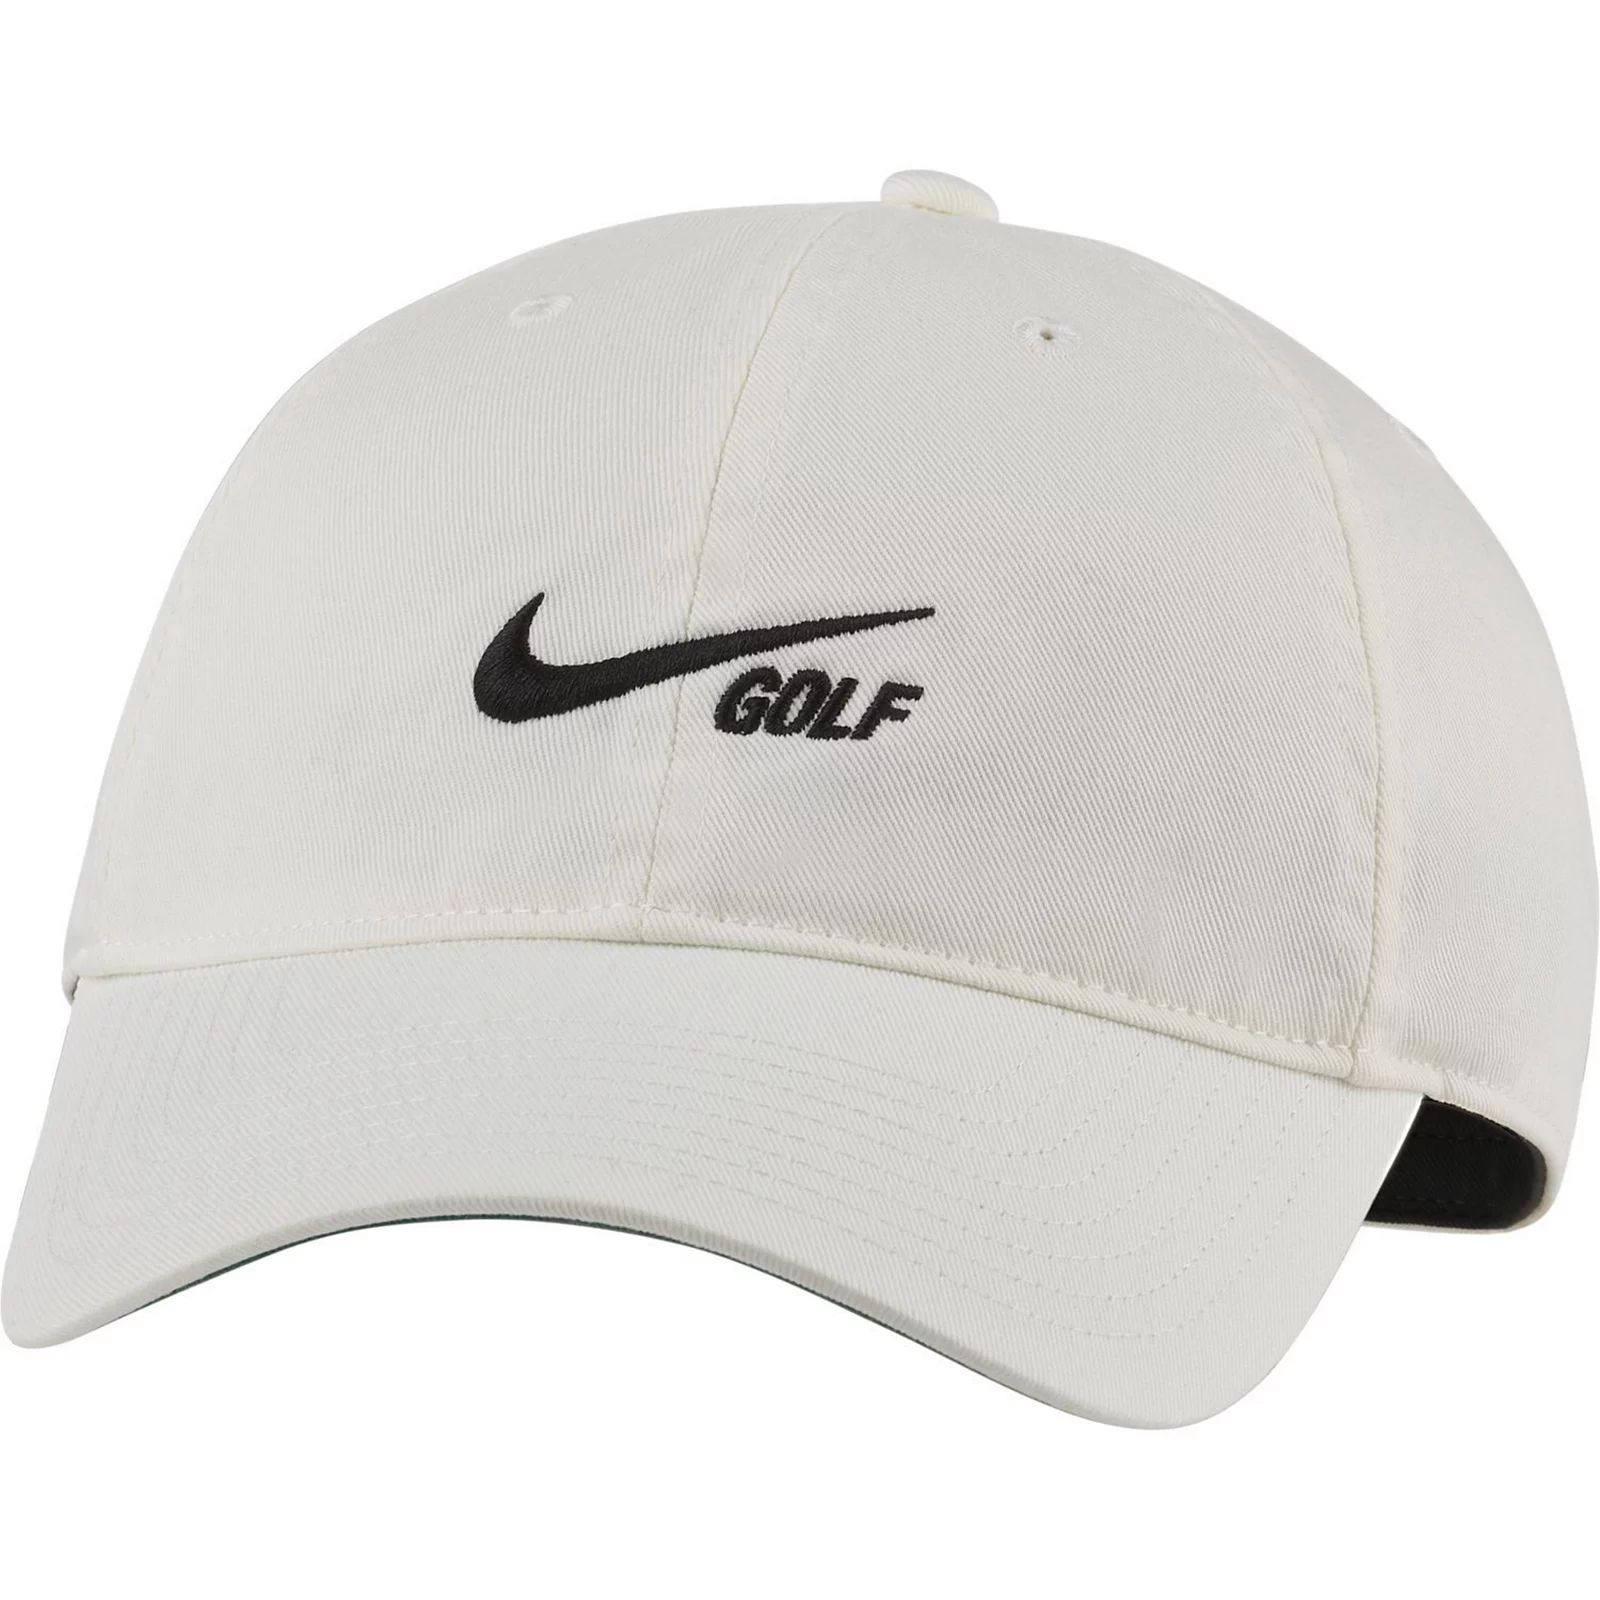 Men's Nike Heritage86 Washed Golf Hat, White | Kohl's